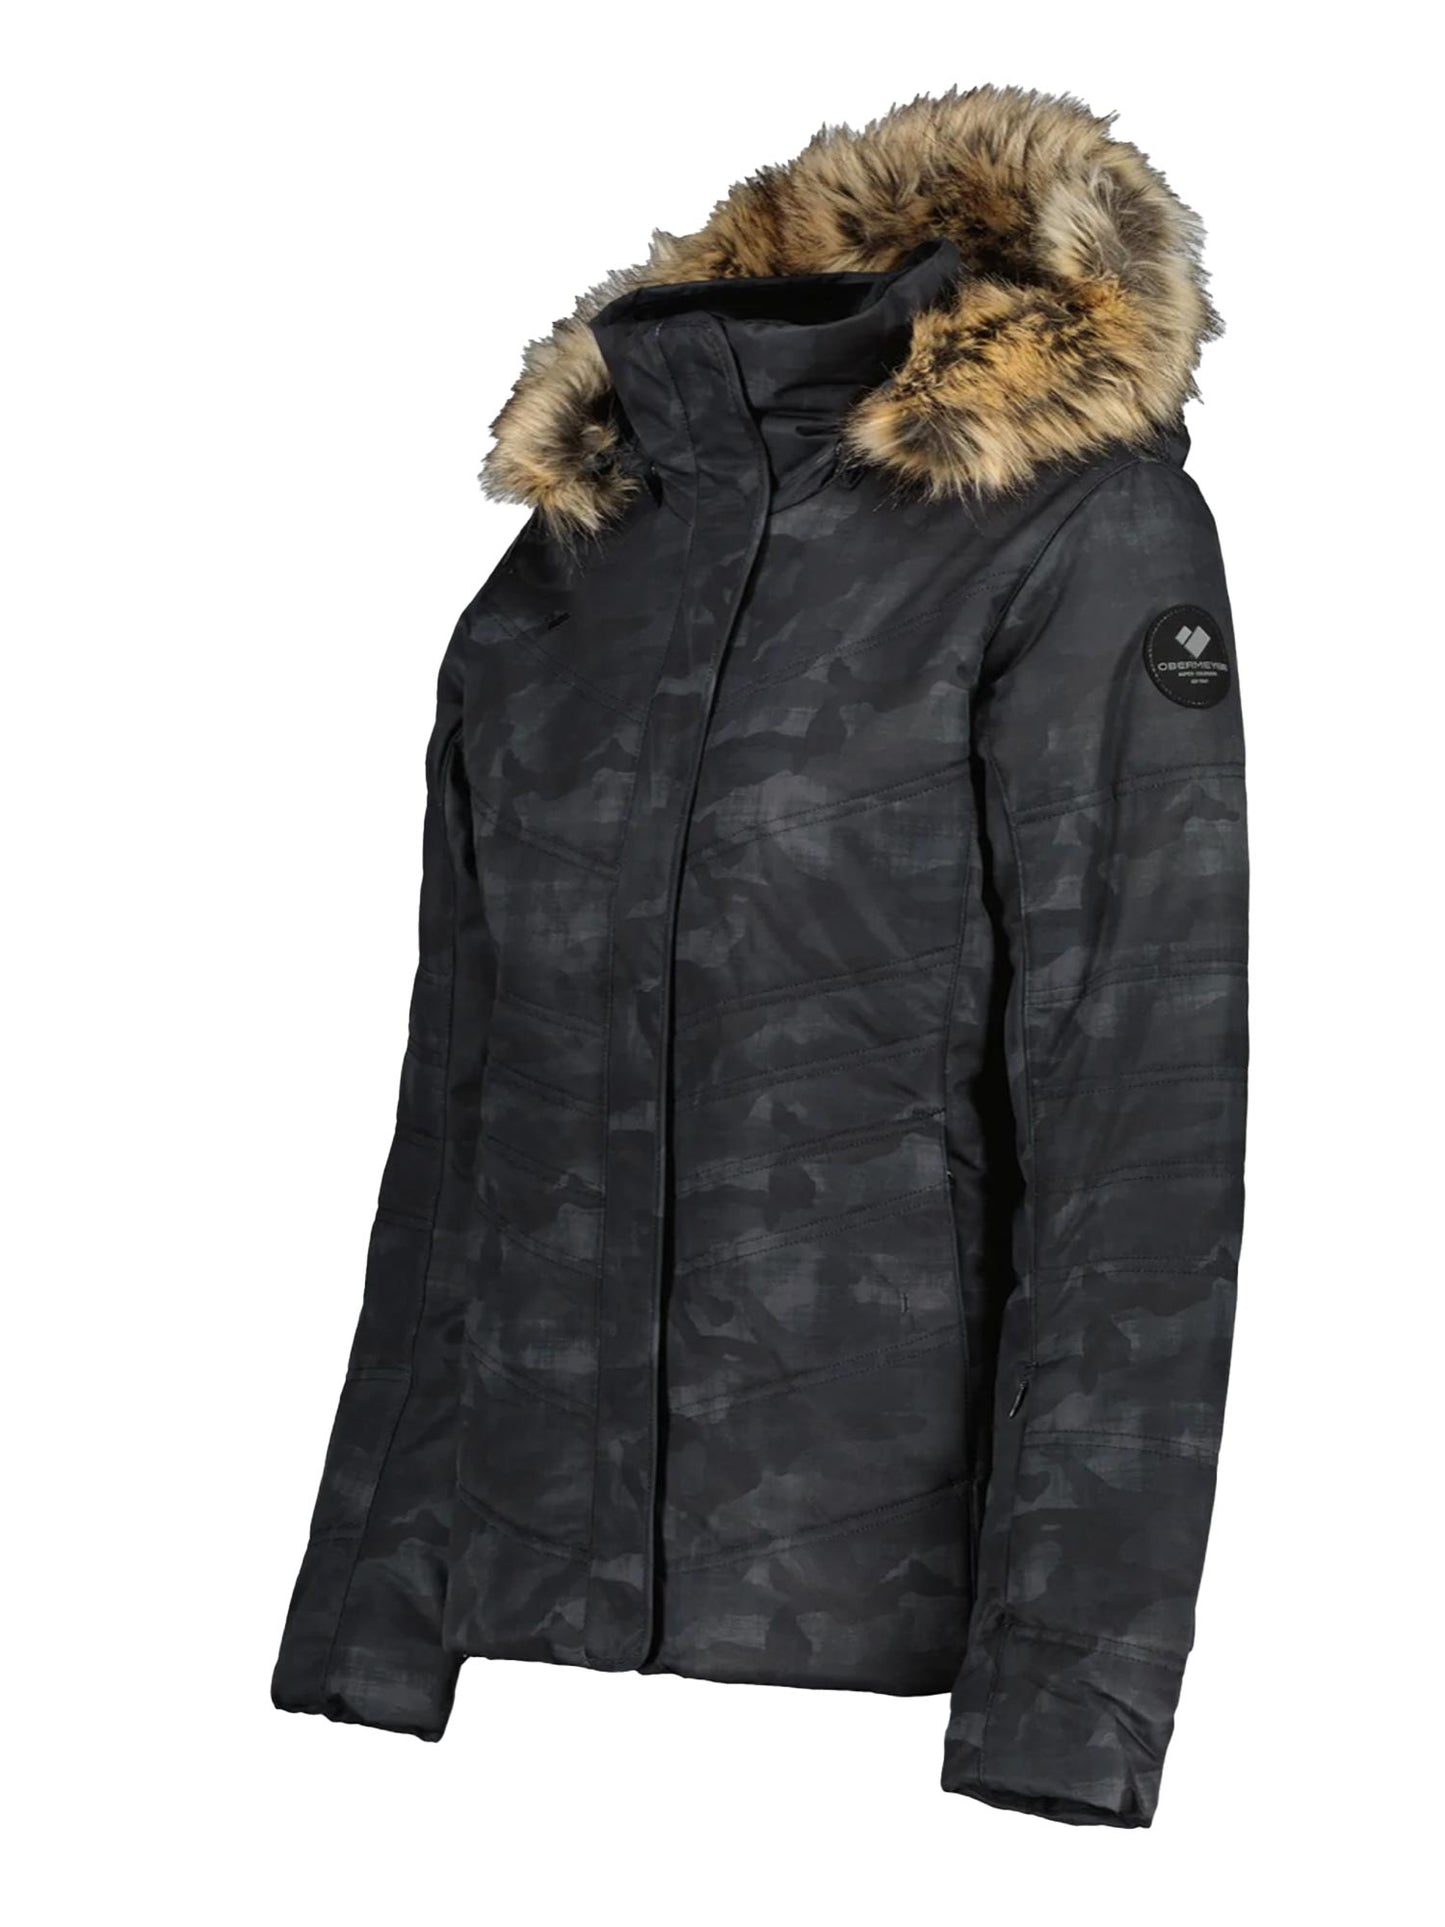 women's ski jacket, black/gray pattern with faux fur hood